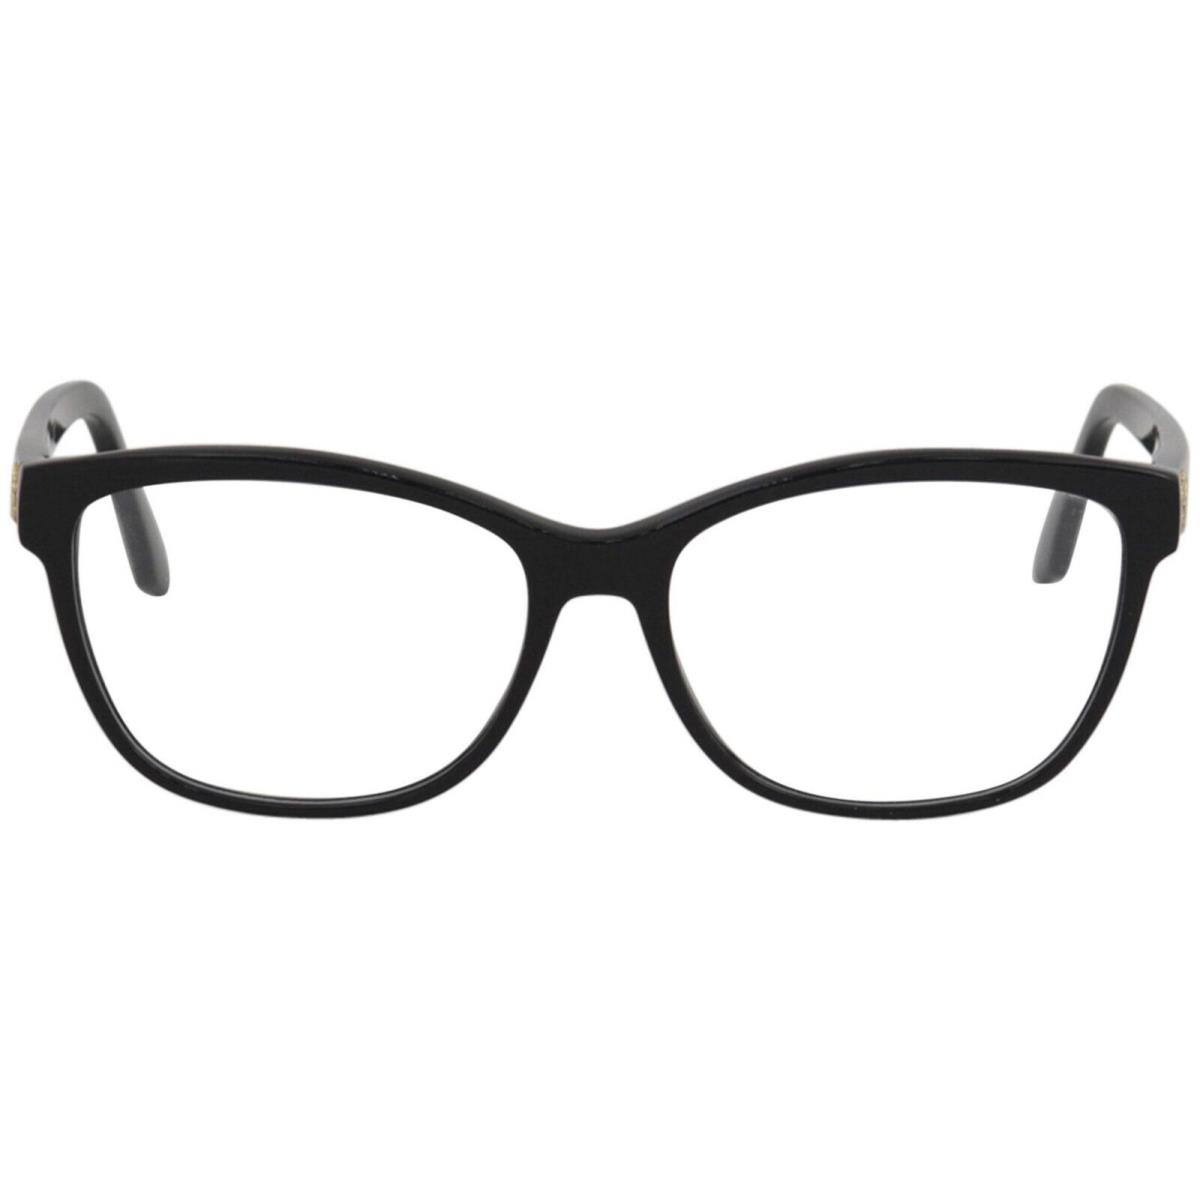 Roberto Cavalli Sirrah RC970 001 Black Plastic Eyeglasses Frame 55-15-140 RC0970 - Black, Frame: Black, Lens: